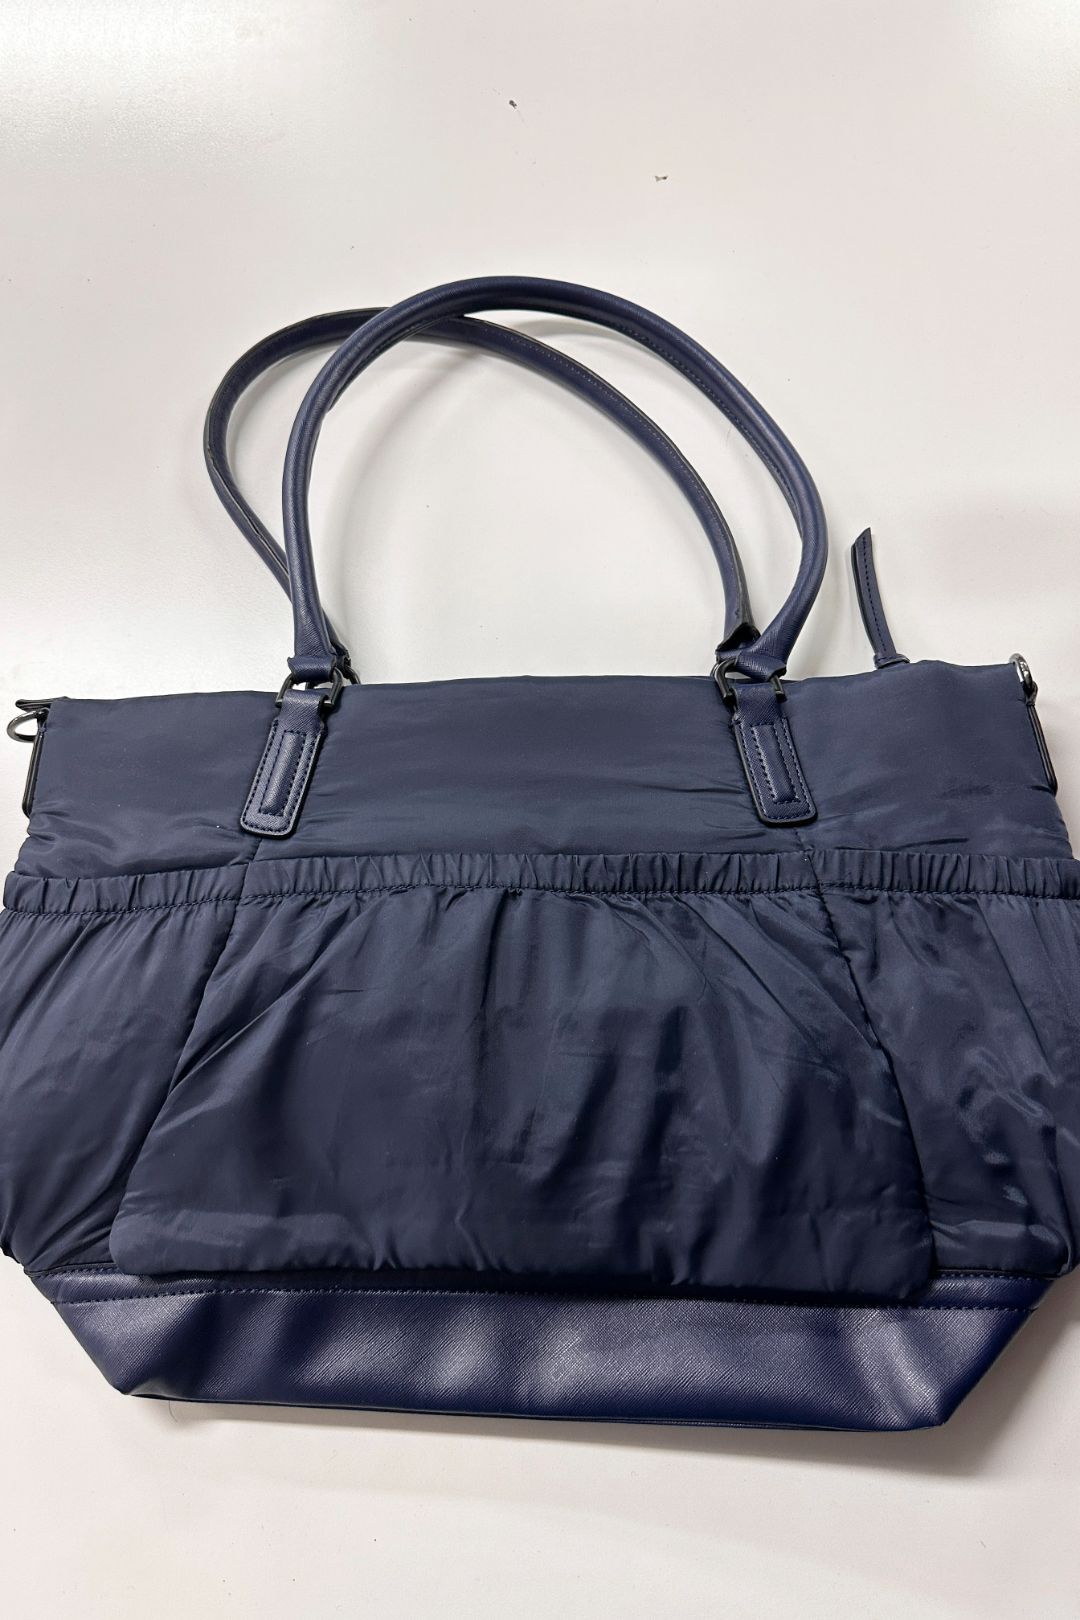 Mimco Lightweight Navy Tote Bag